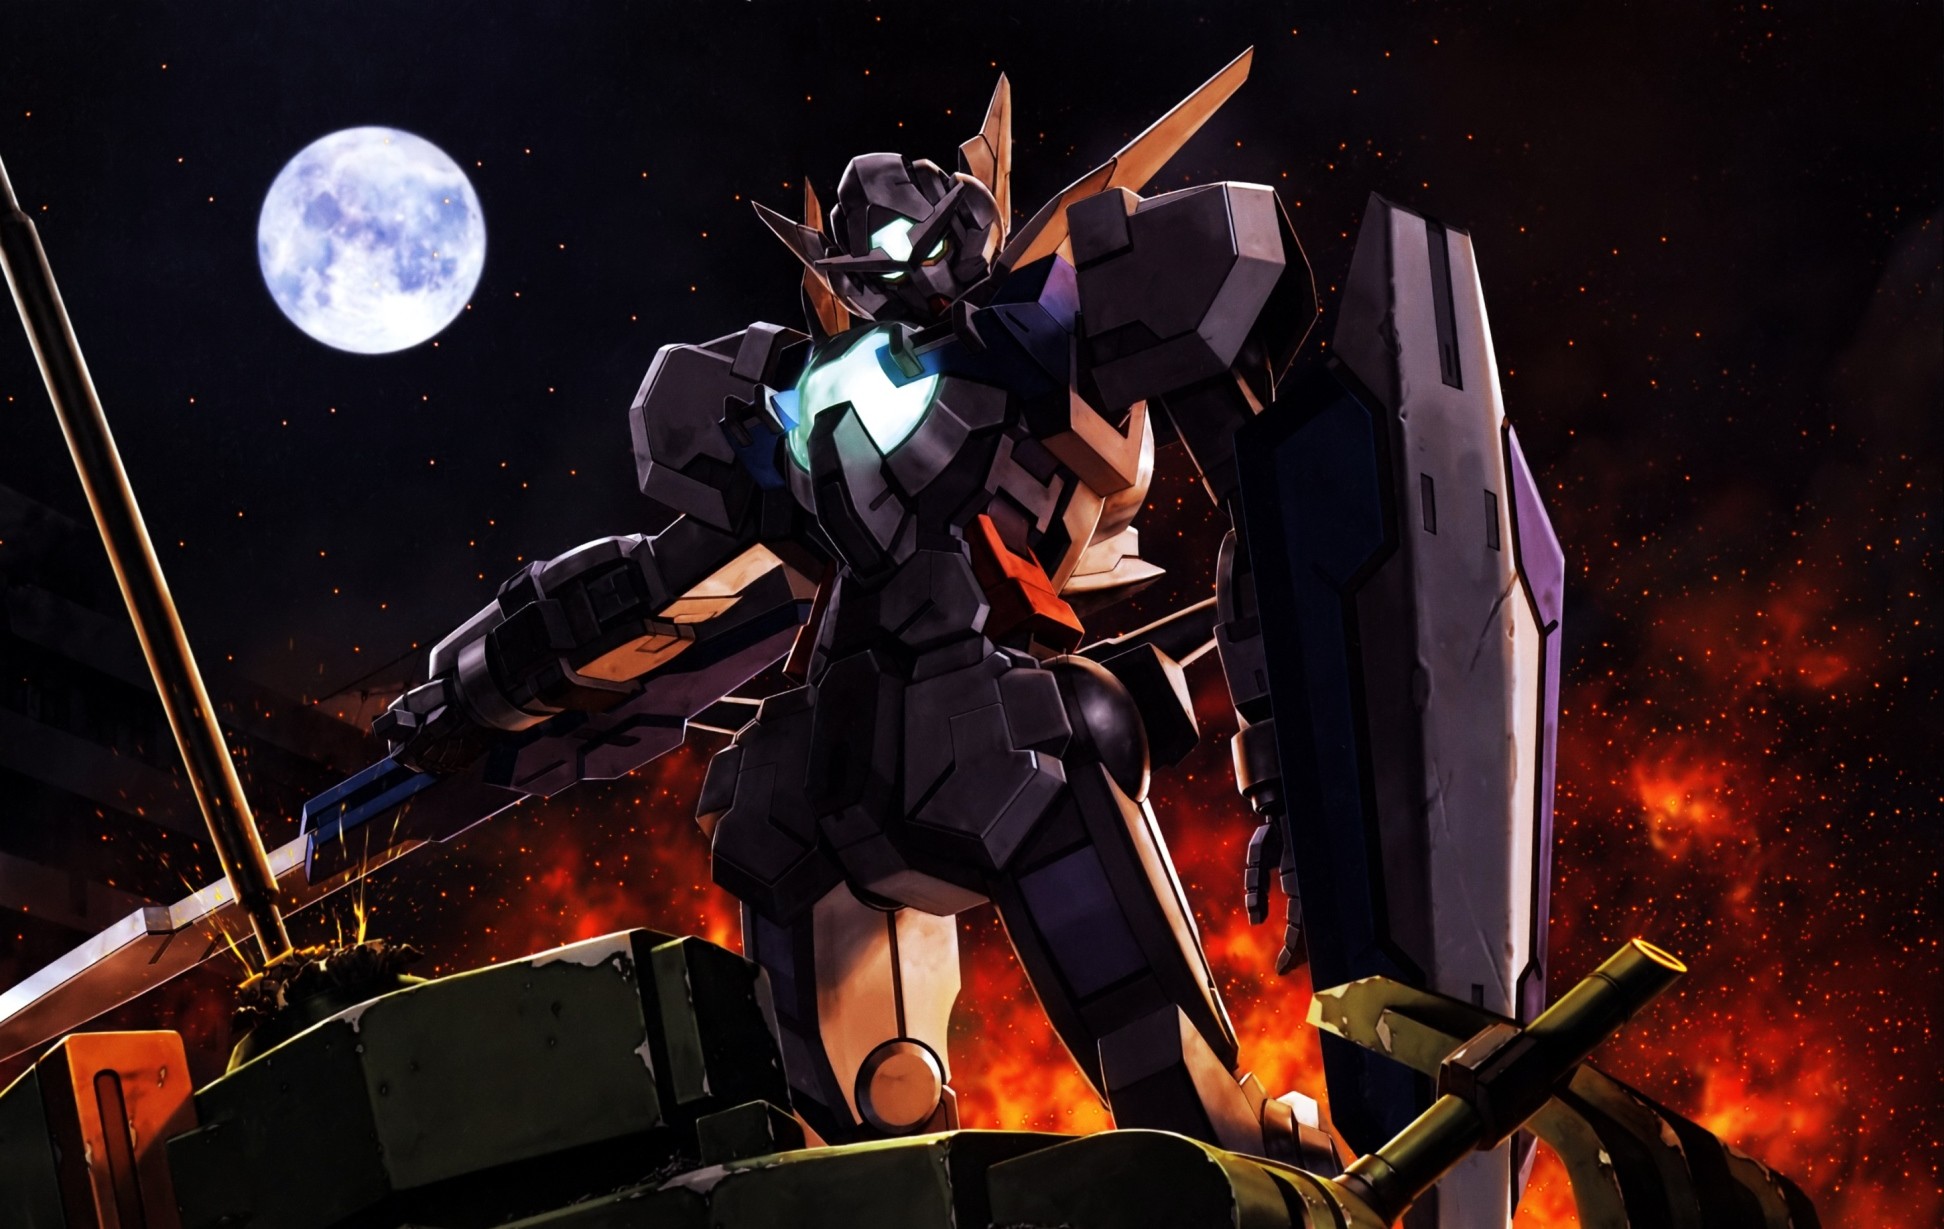 Gundam Background Wallpapers WIN10 THEMES